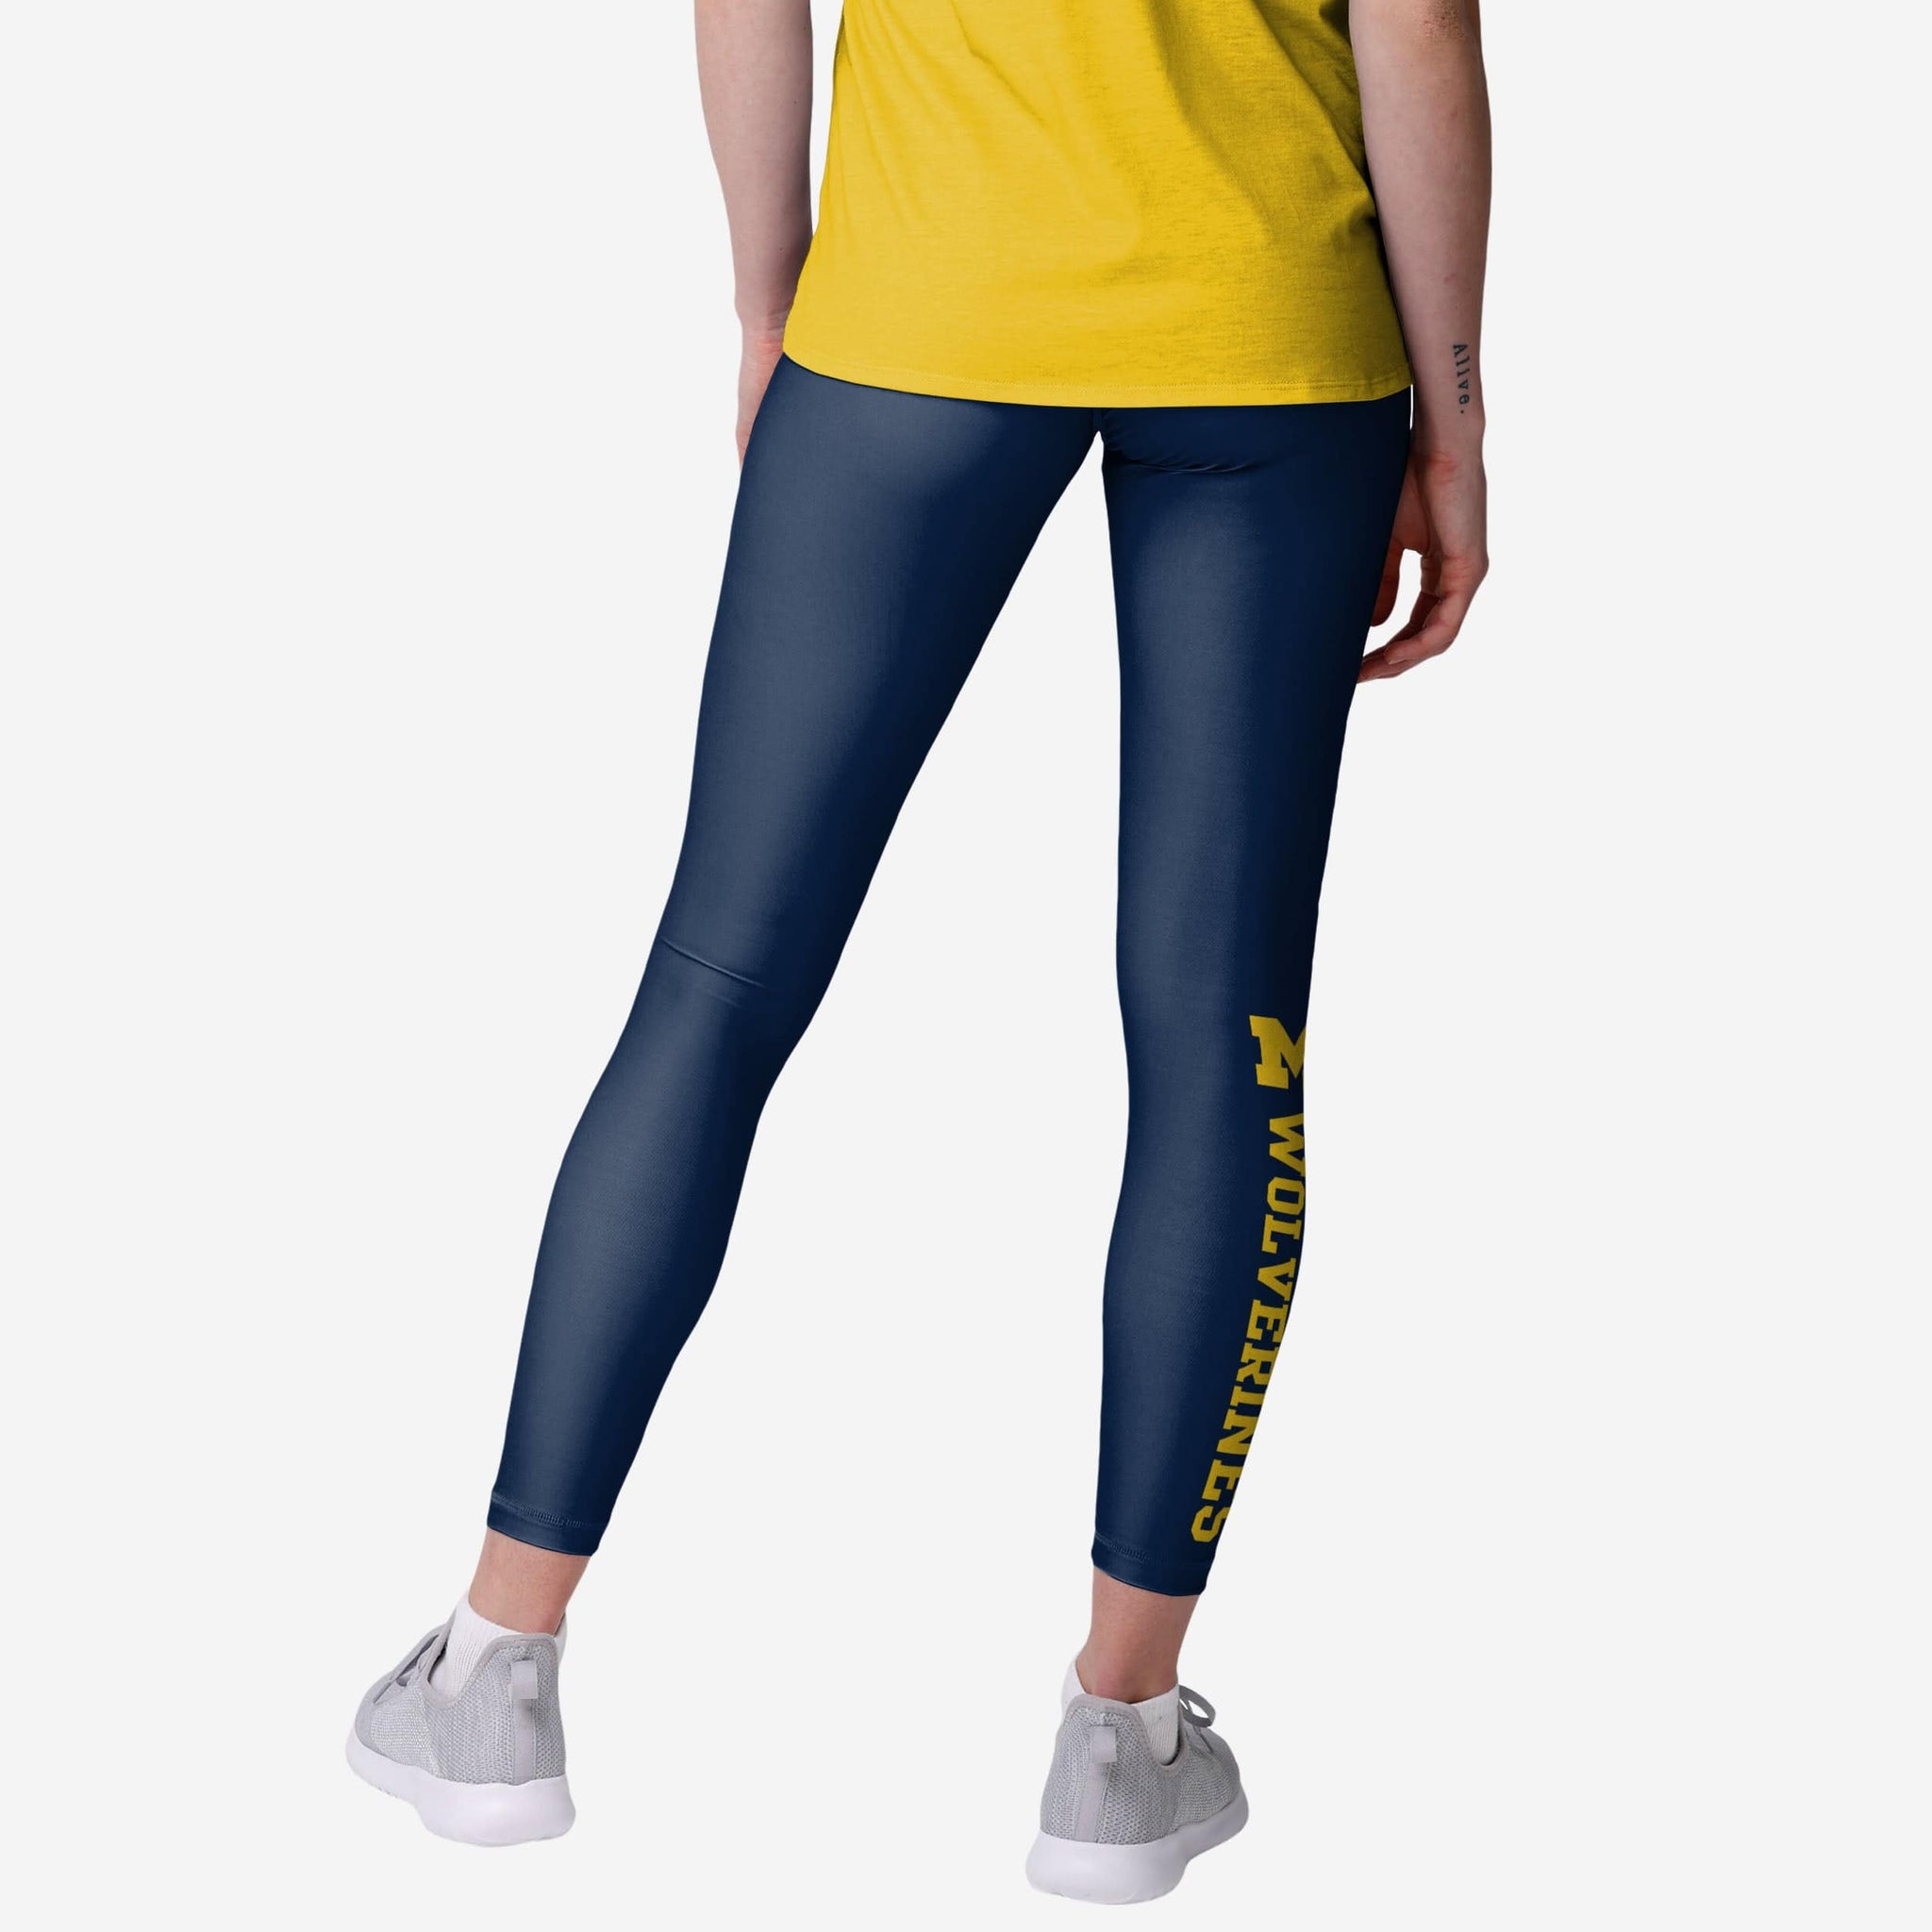 AE, Graphic Wordmark Leggings - White, Workout Leggings Women